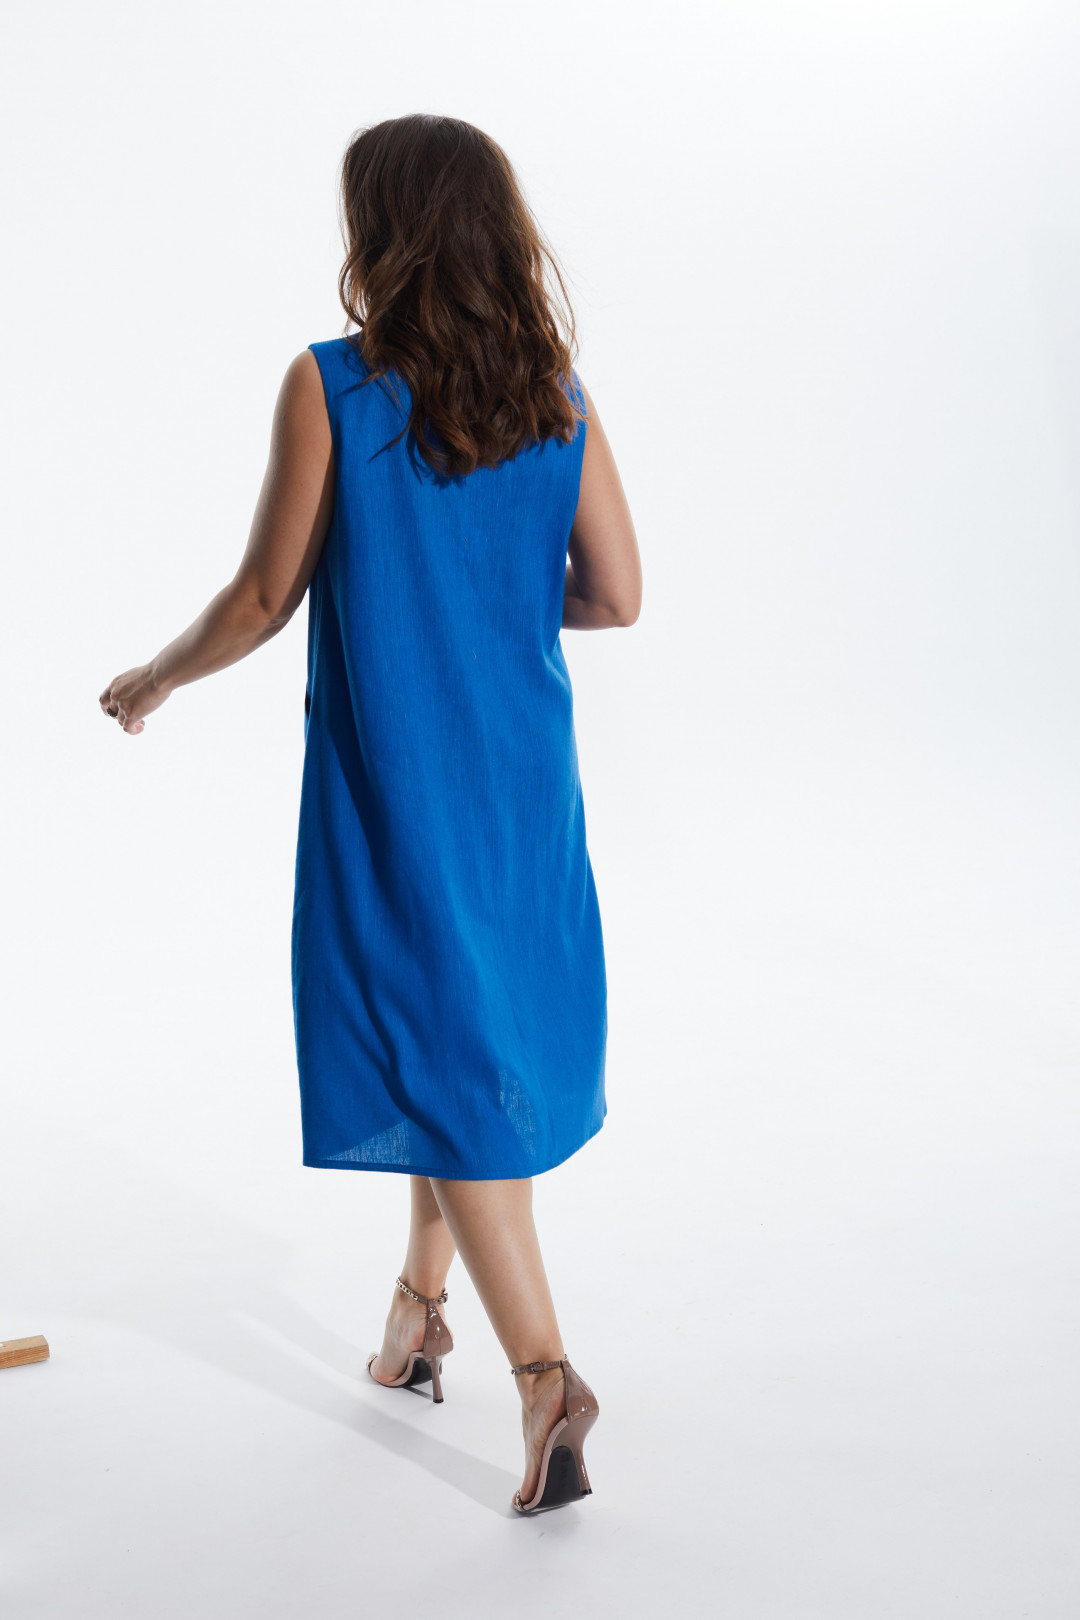 Платье MALI 422-051 синий